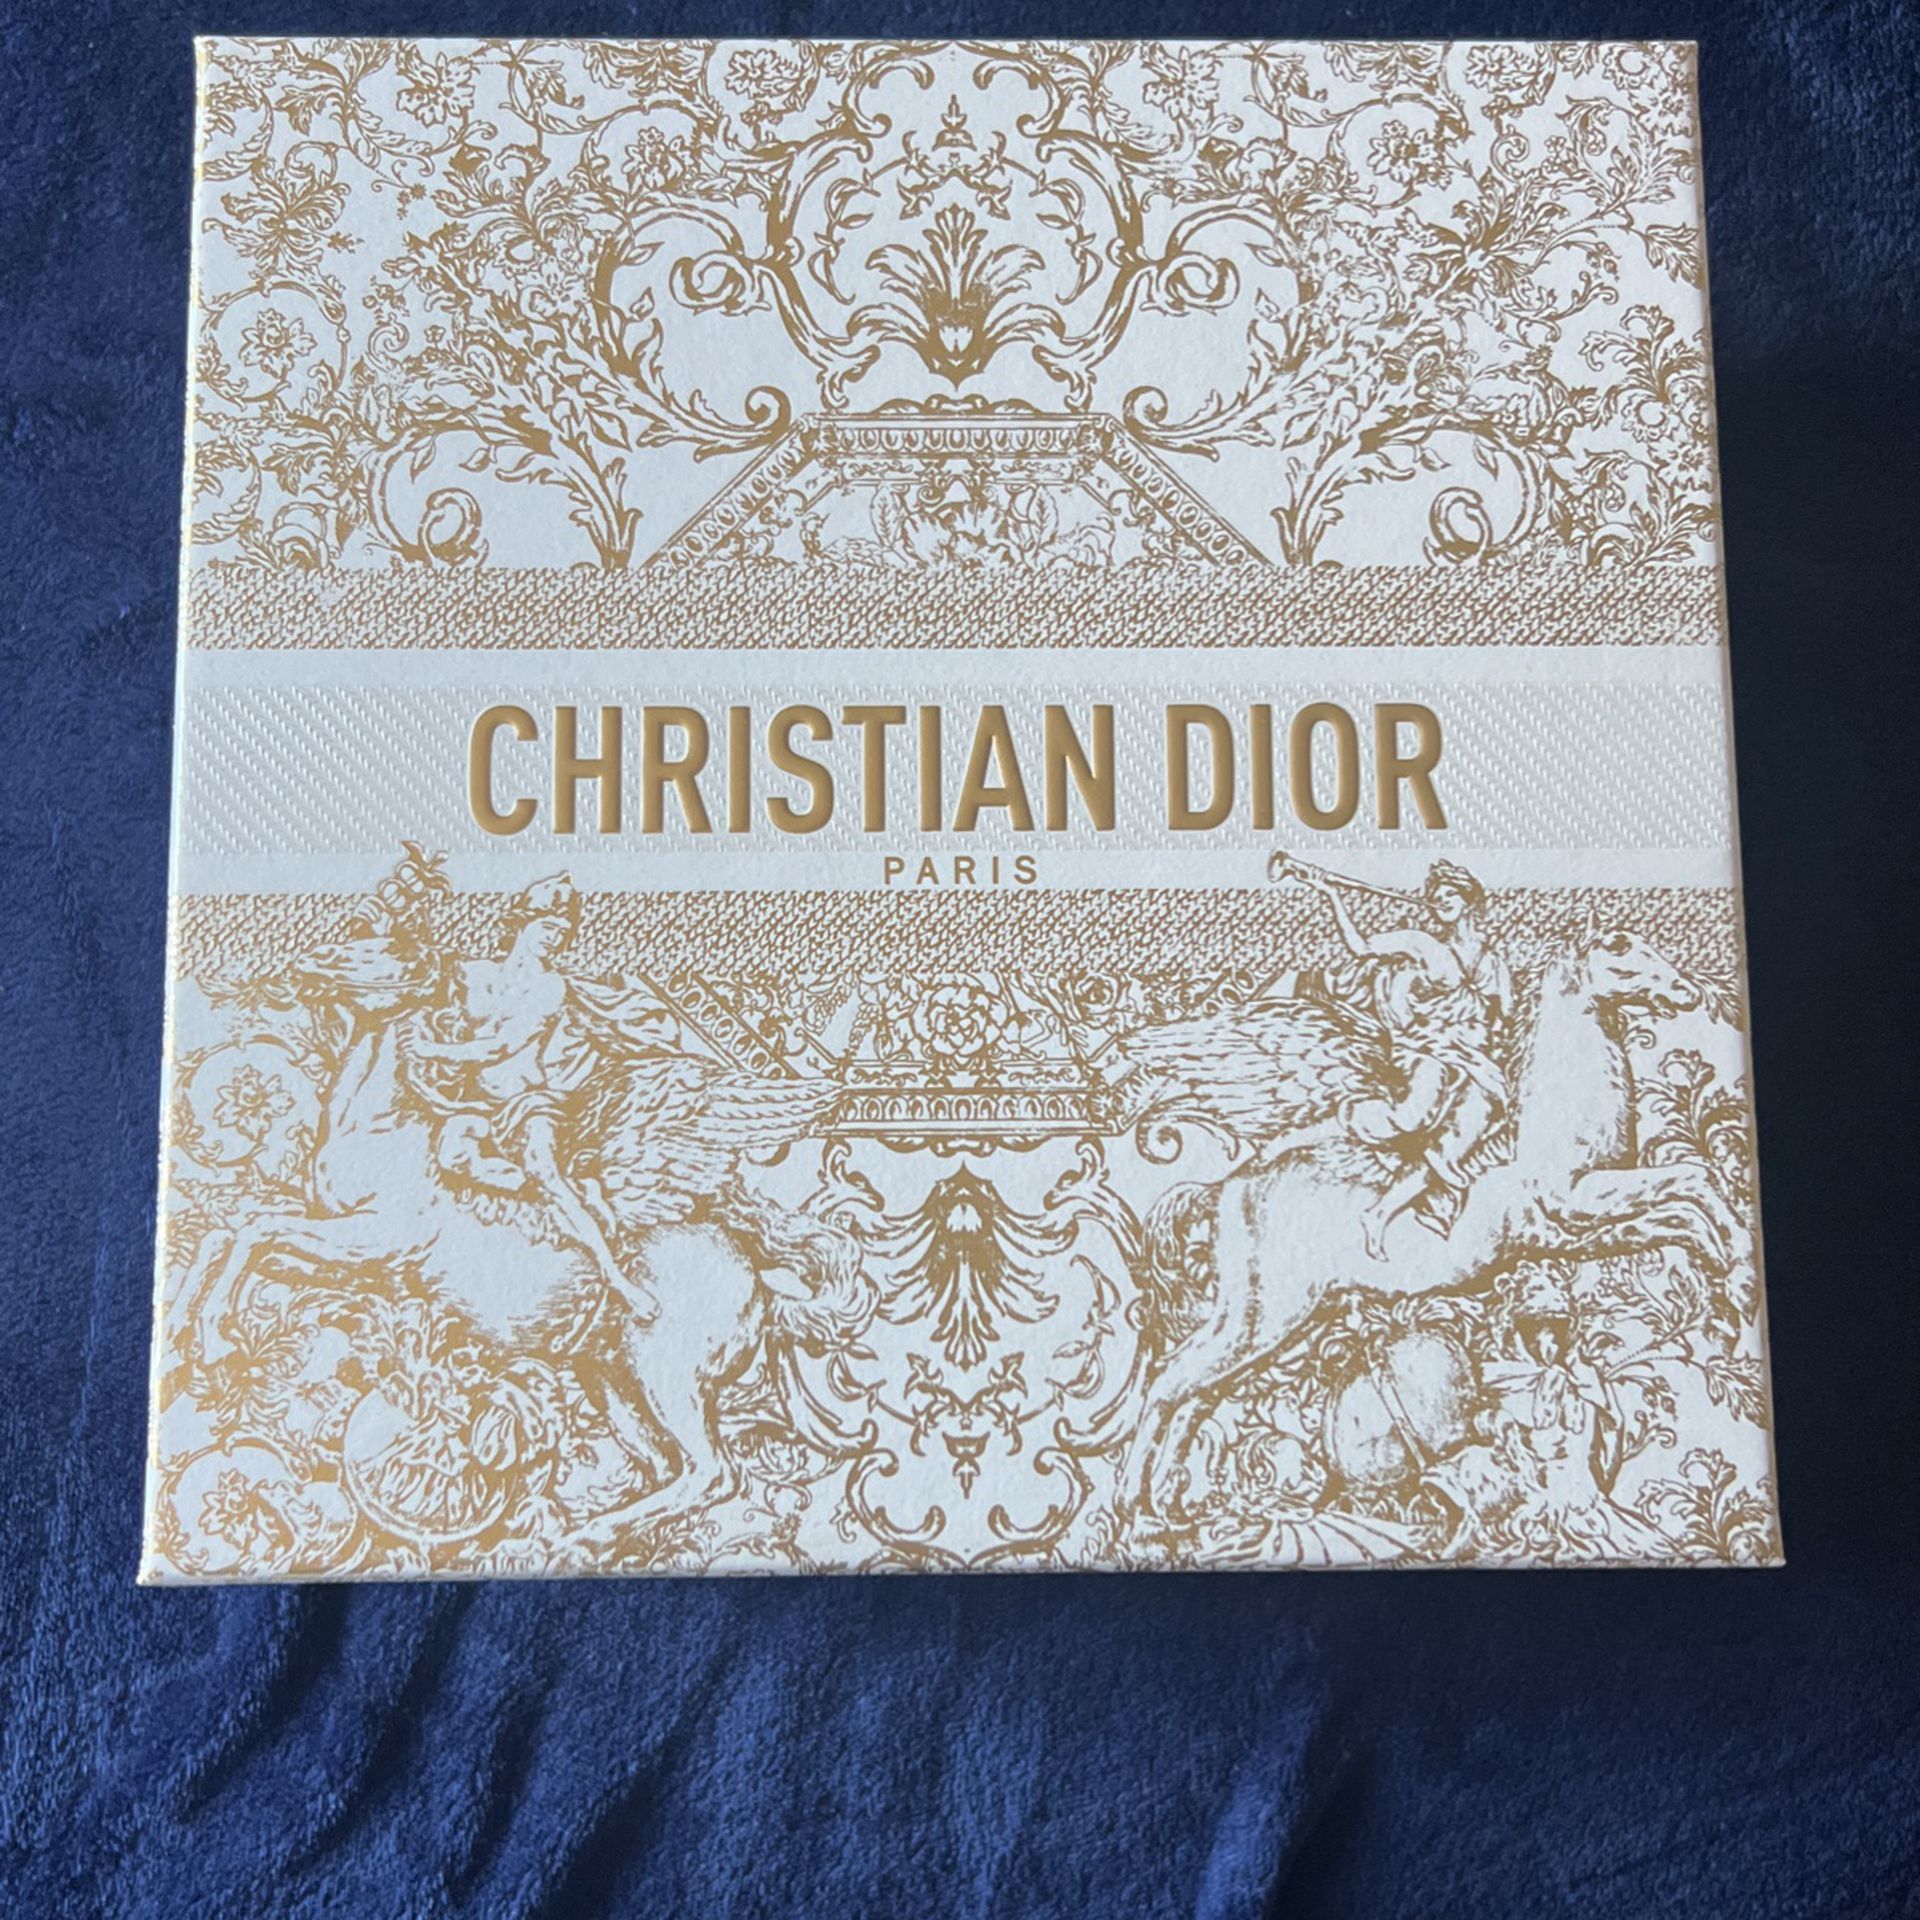 Authentic Dior Perfume Box